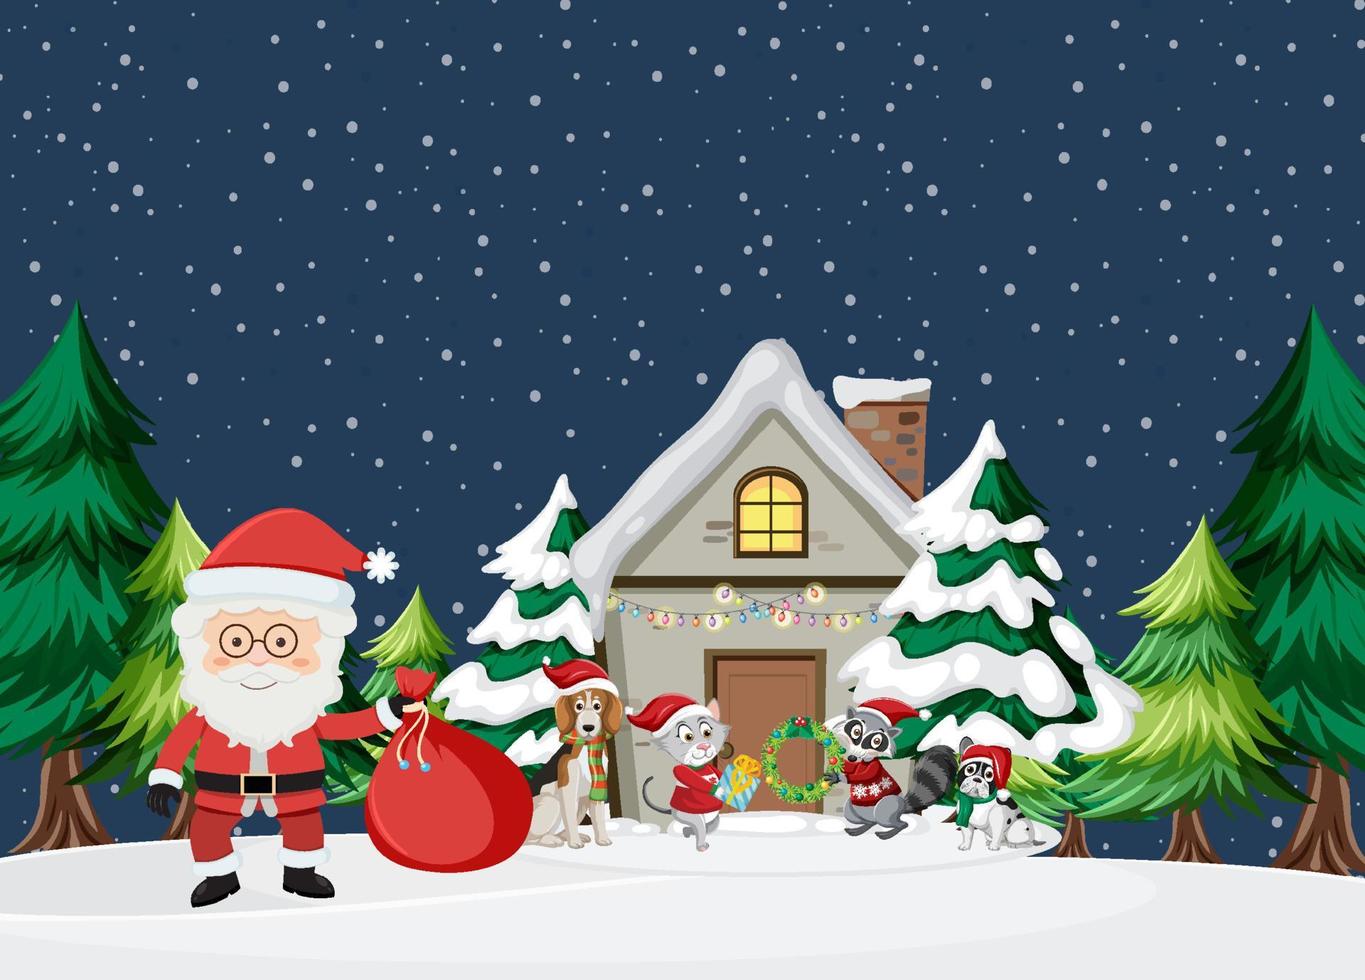 Christmas theme with Santa and animals vector